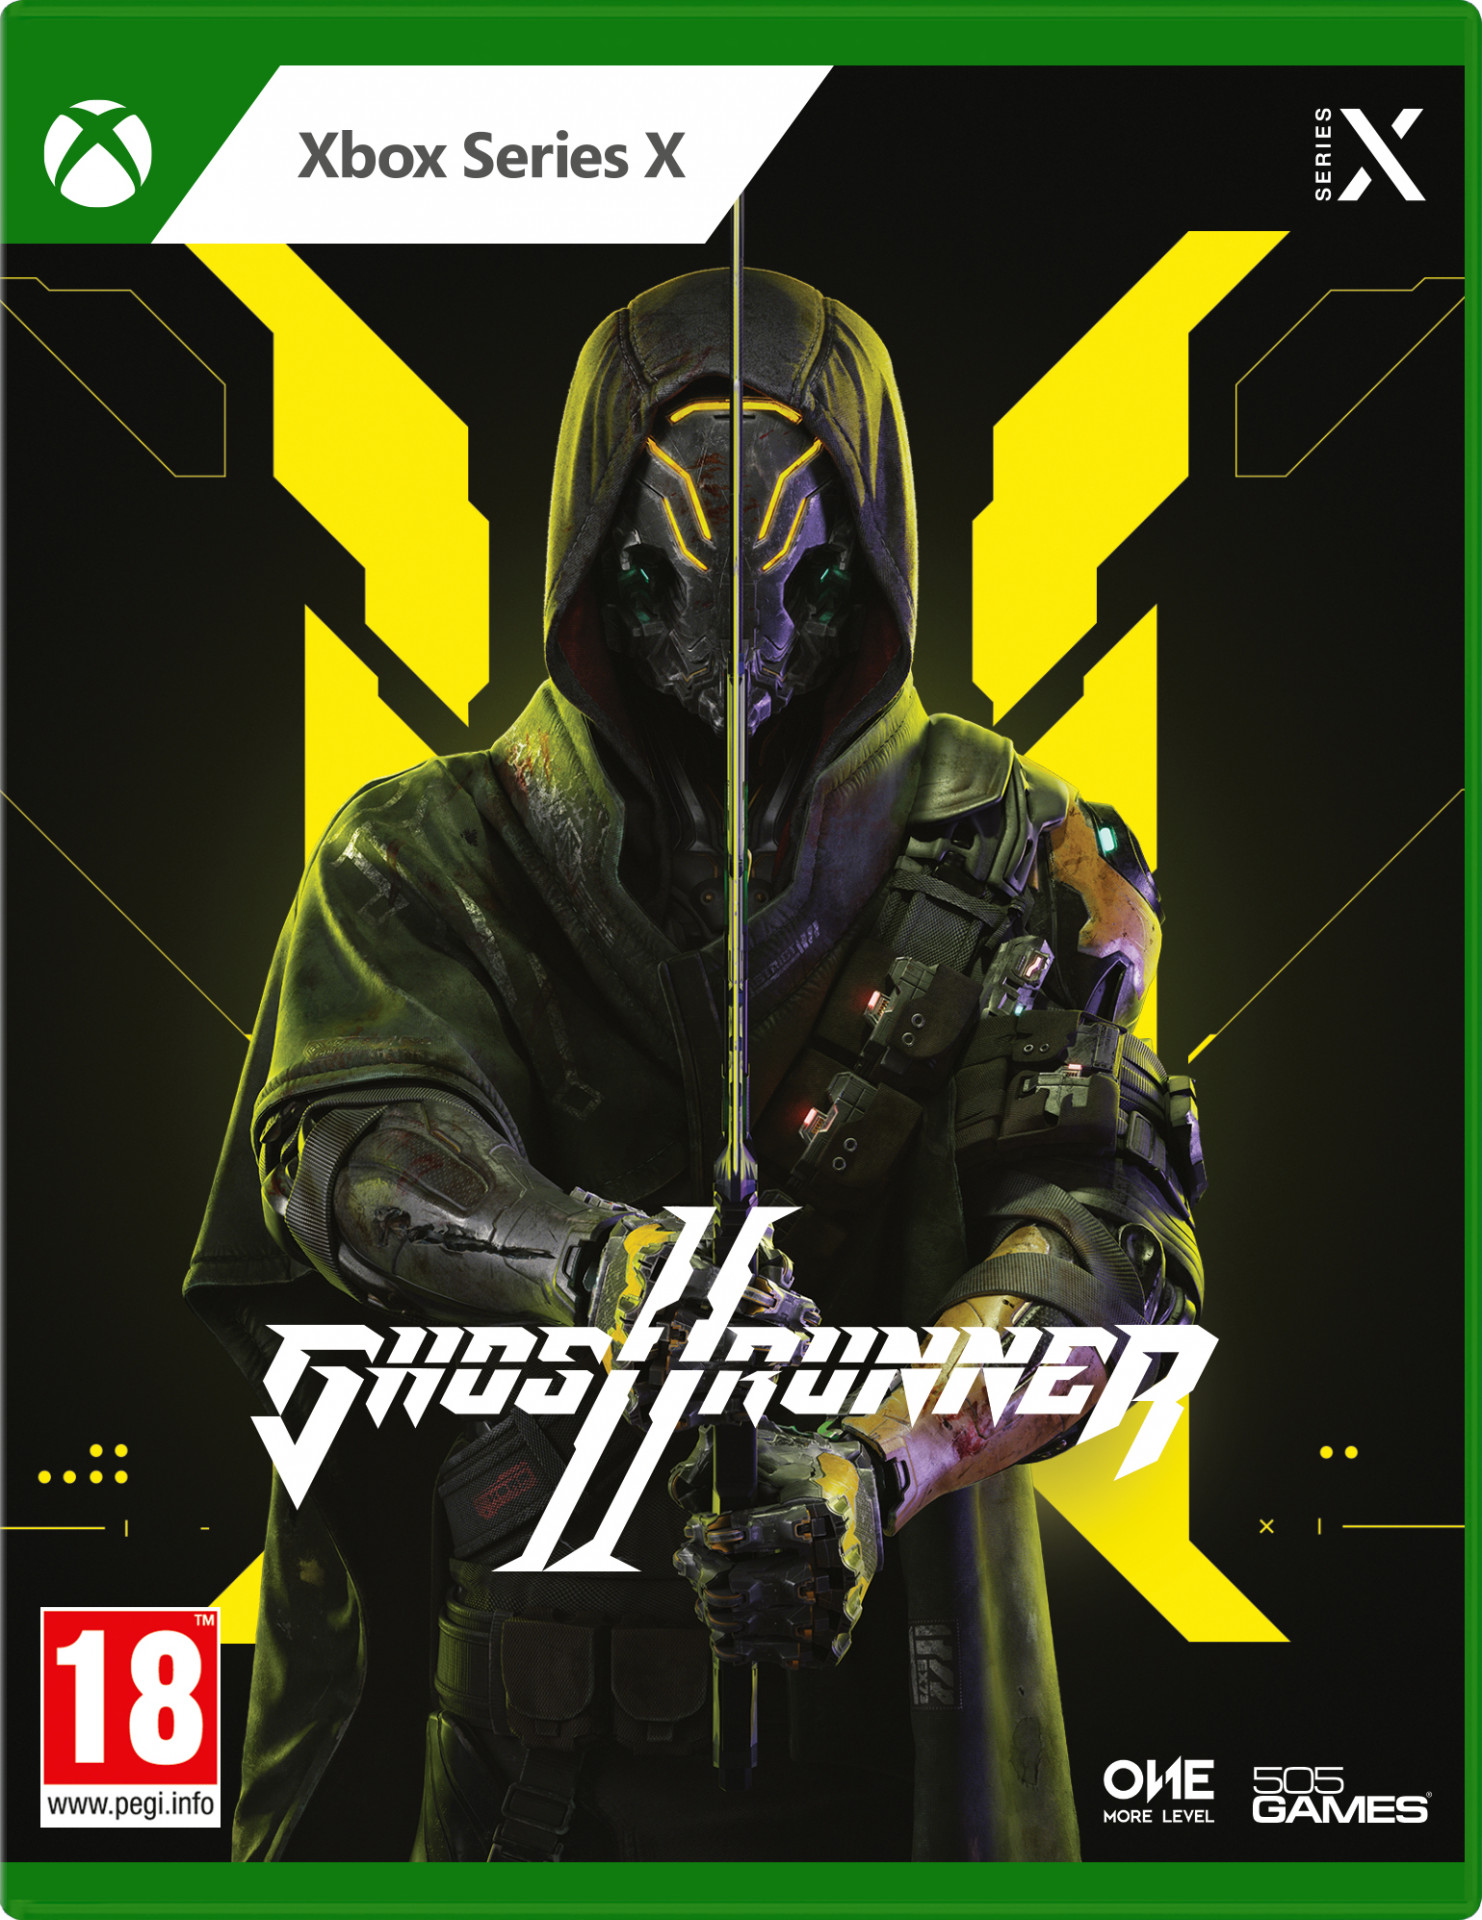 Ghostrunner 2 (Xbox Series X), 505 Games